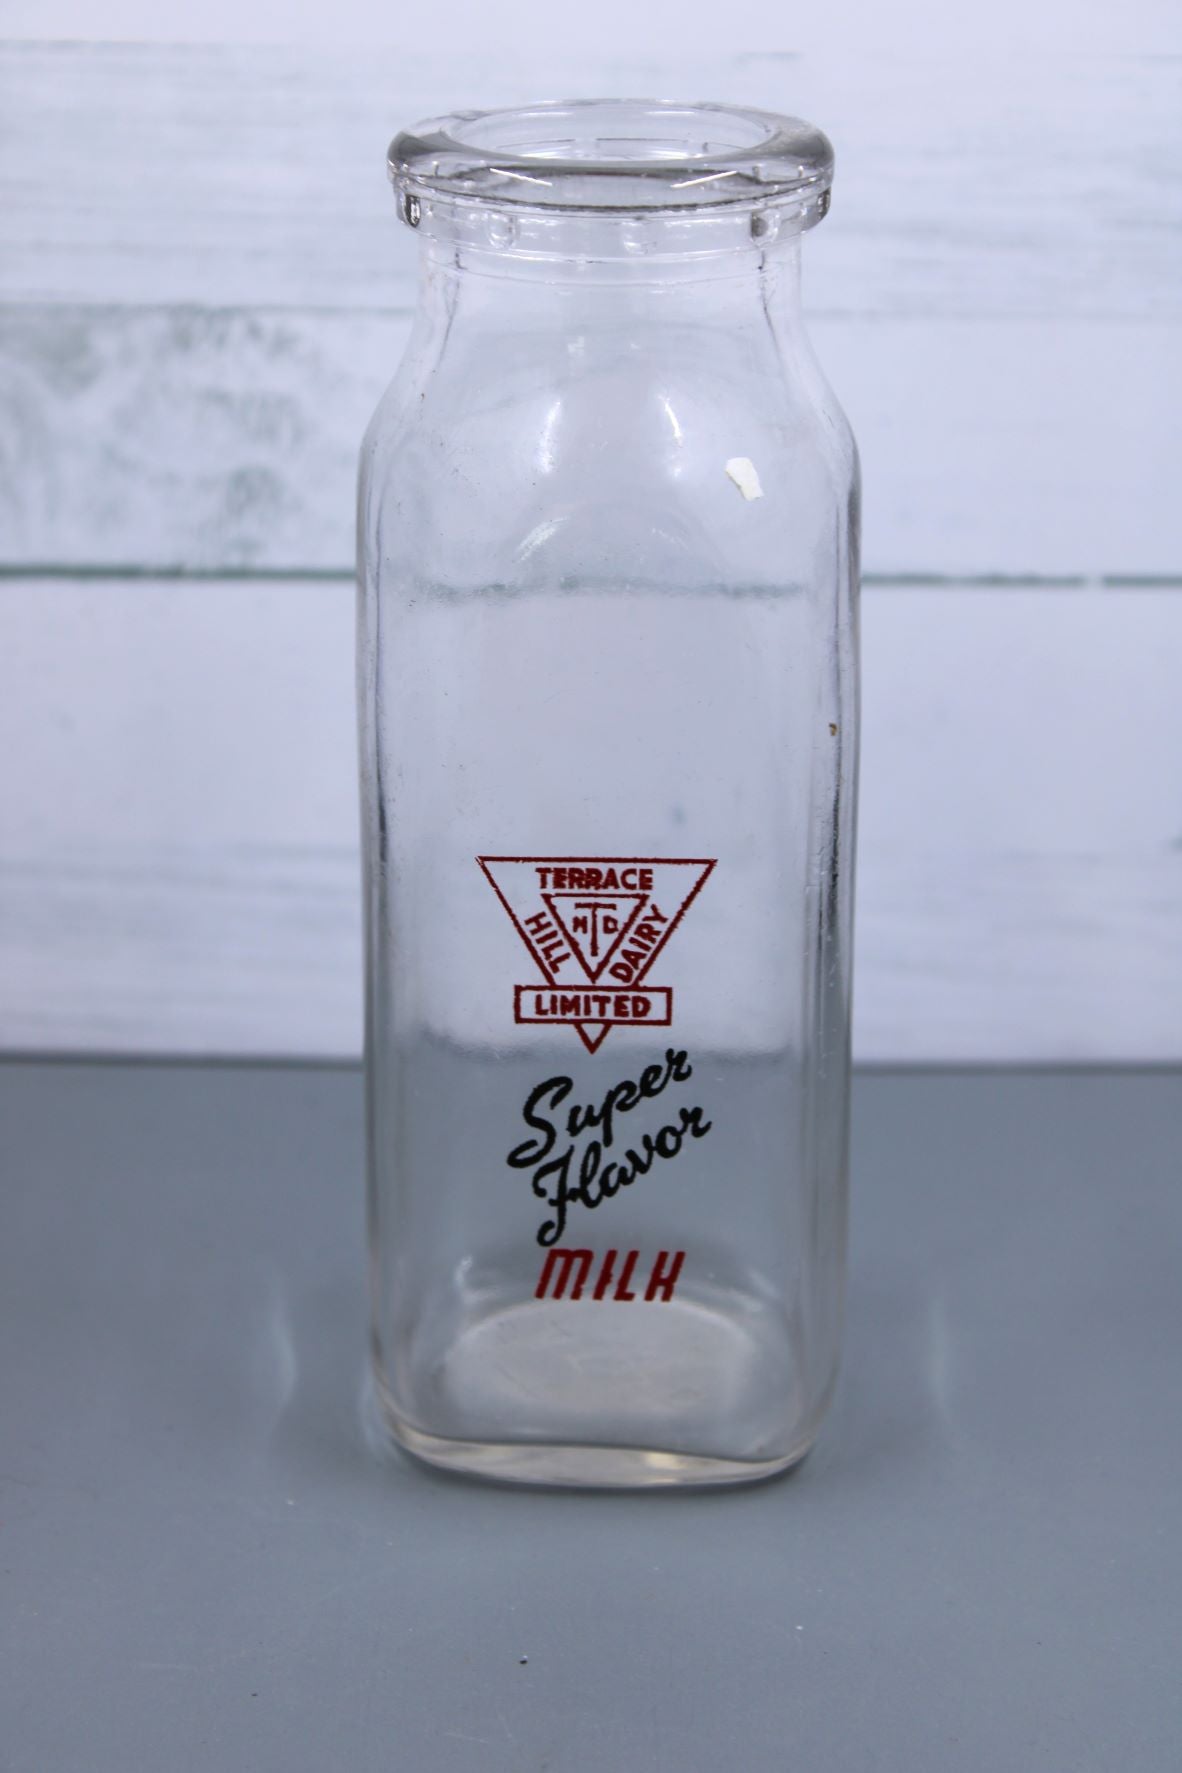 Vintage Milk Bottle - Terrace Hill Dairy Limited